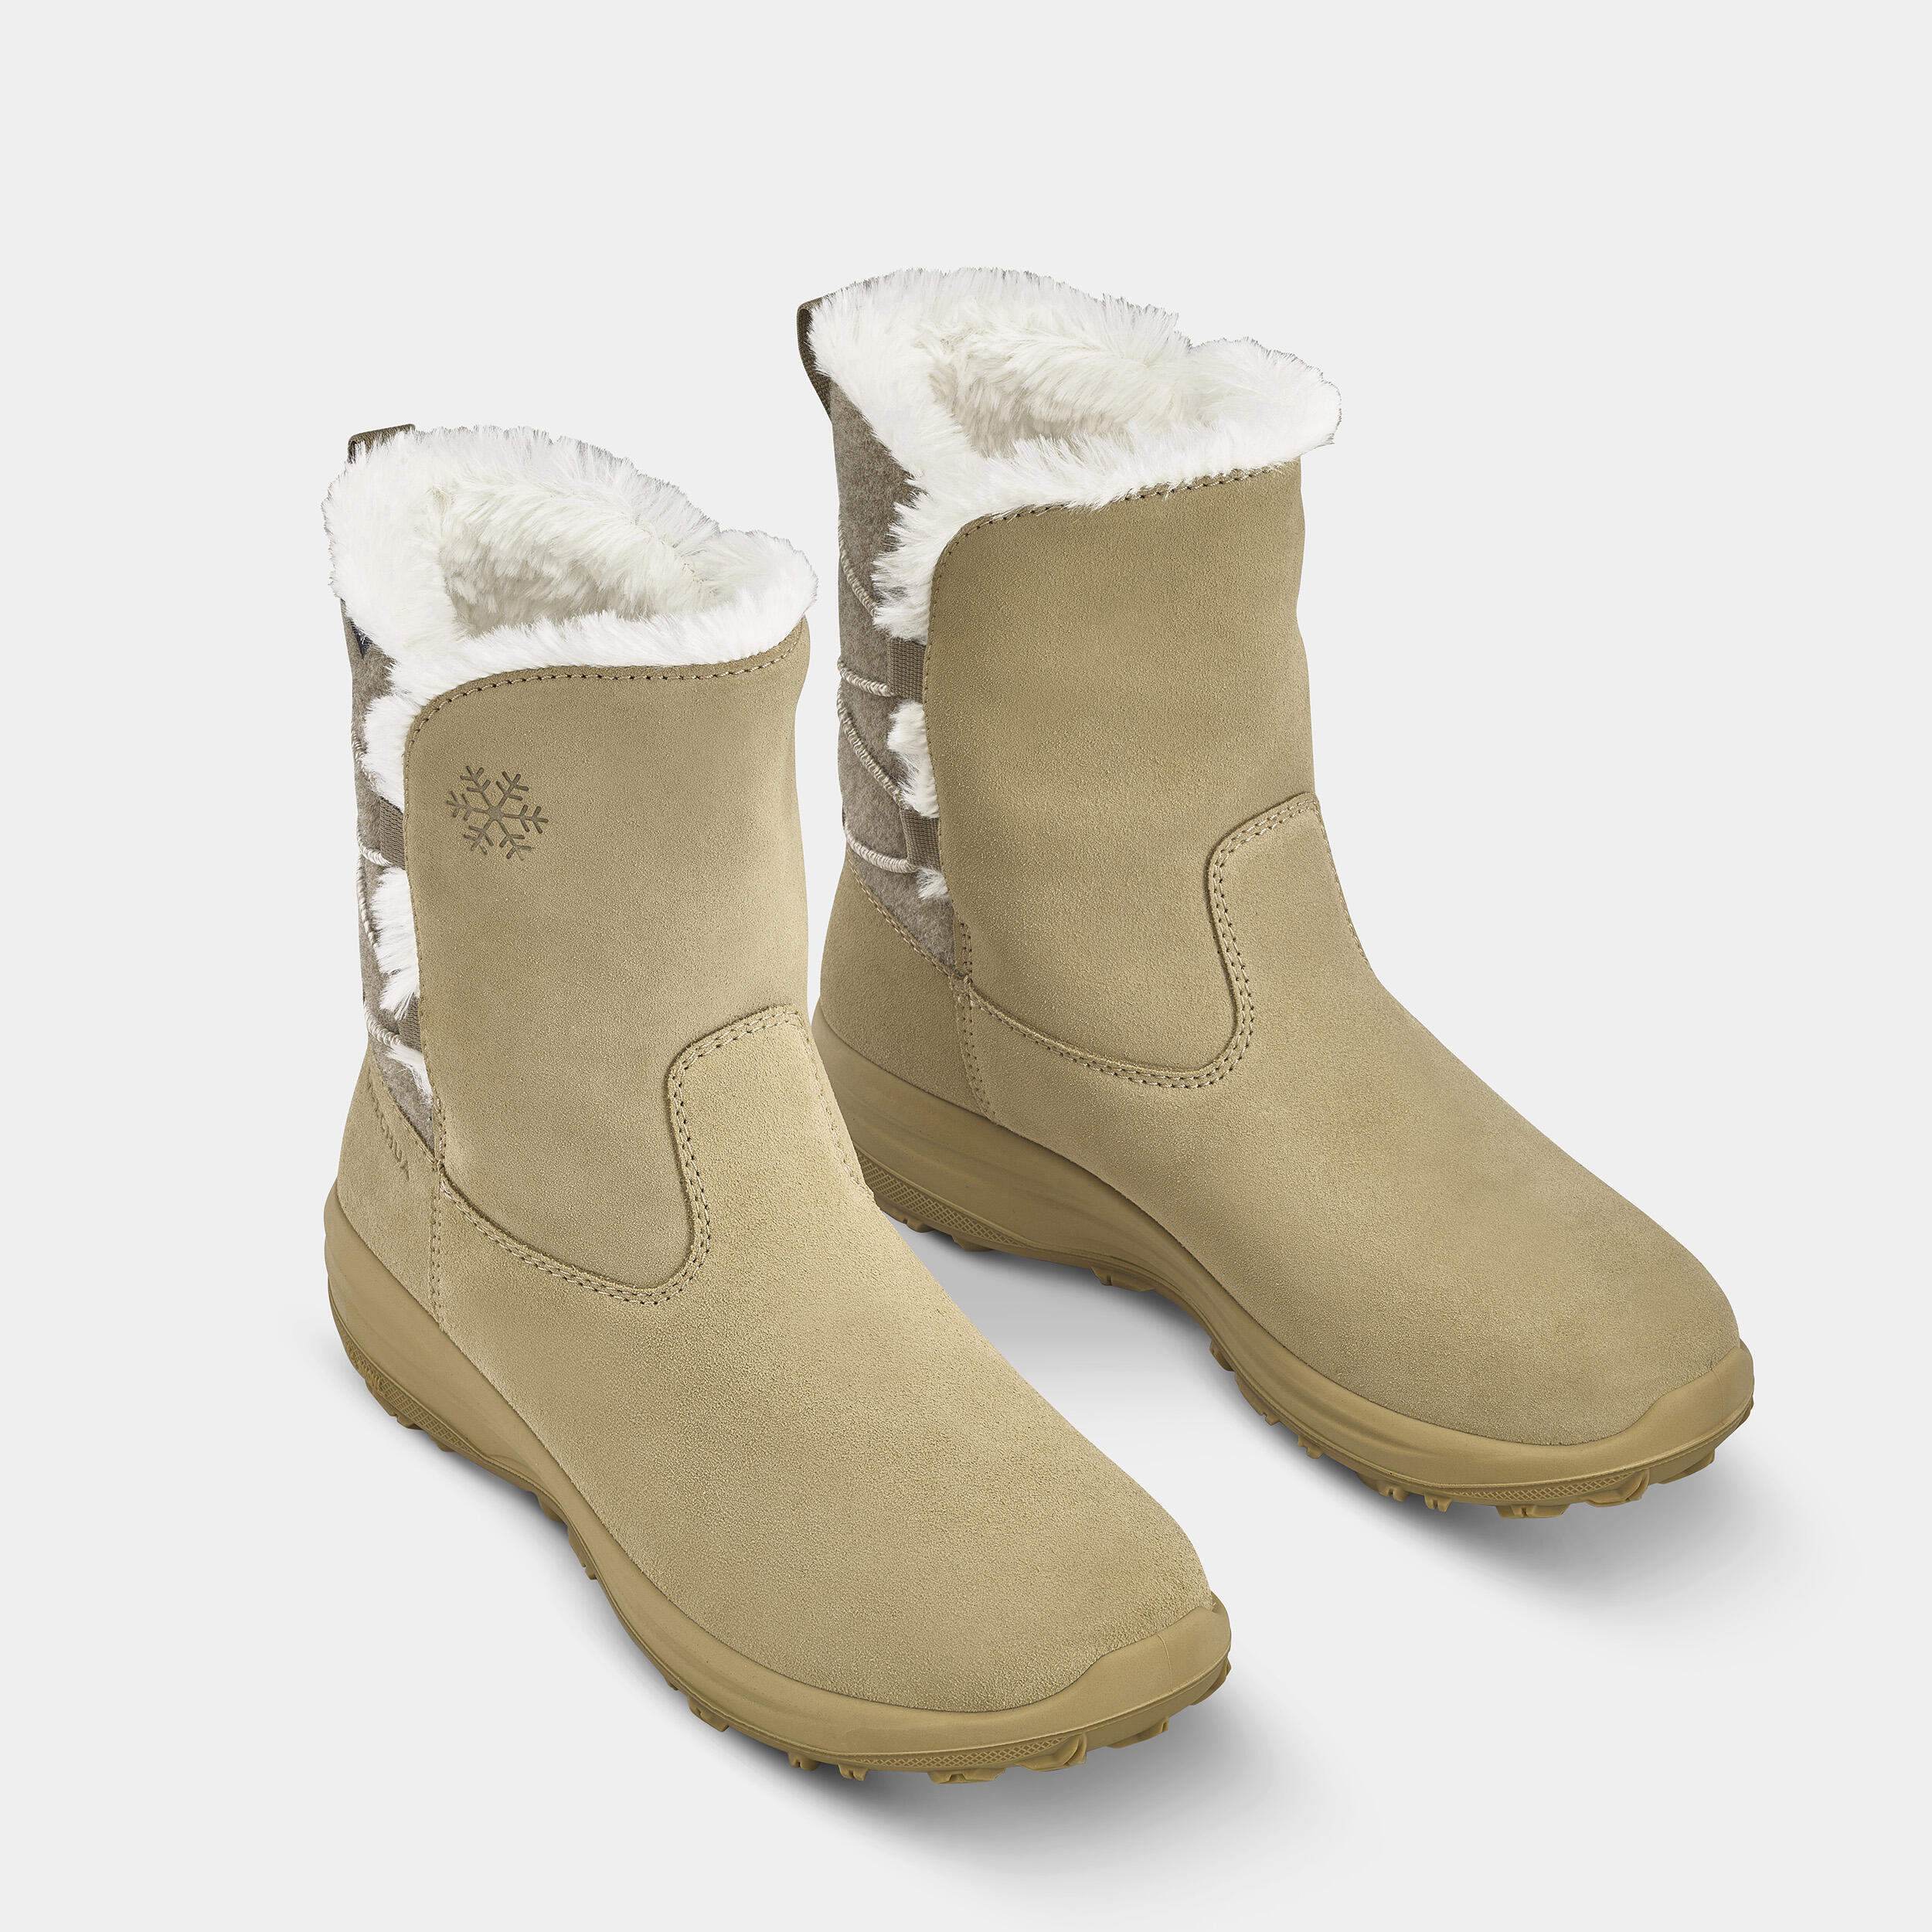 Women's warm waterproof snow hiking boots - SH500 leather 4/10